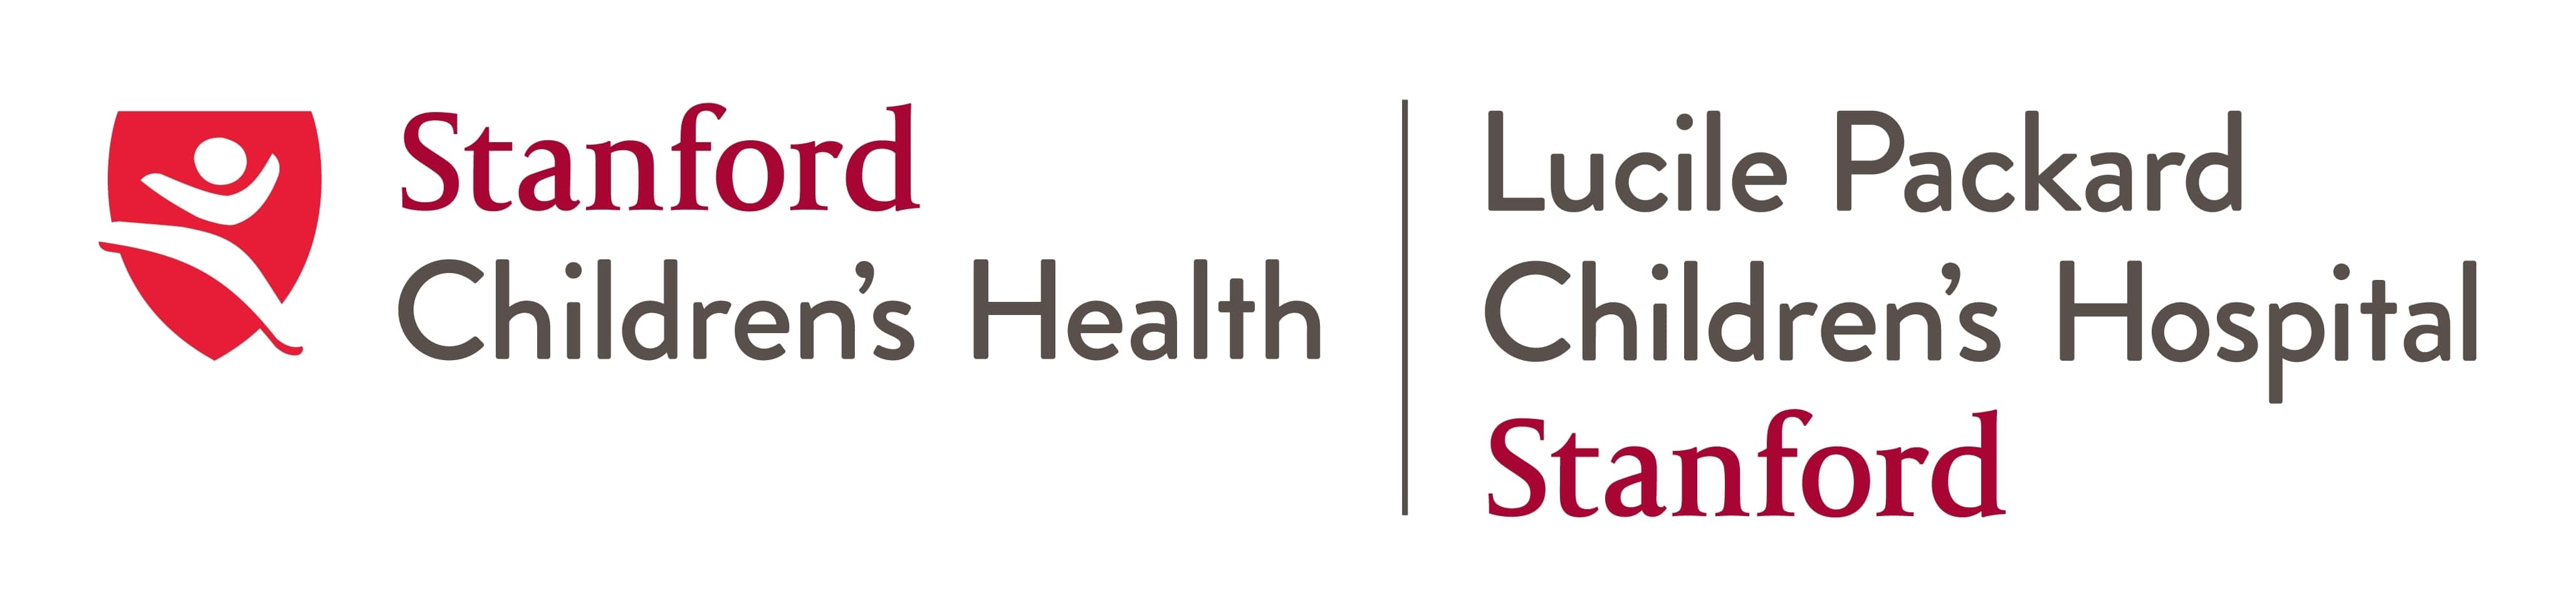 Stanford Children's Health | Lucile Packard Children’s Hospital